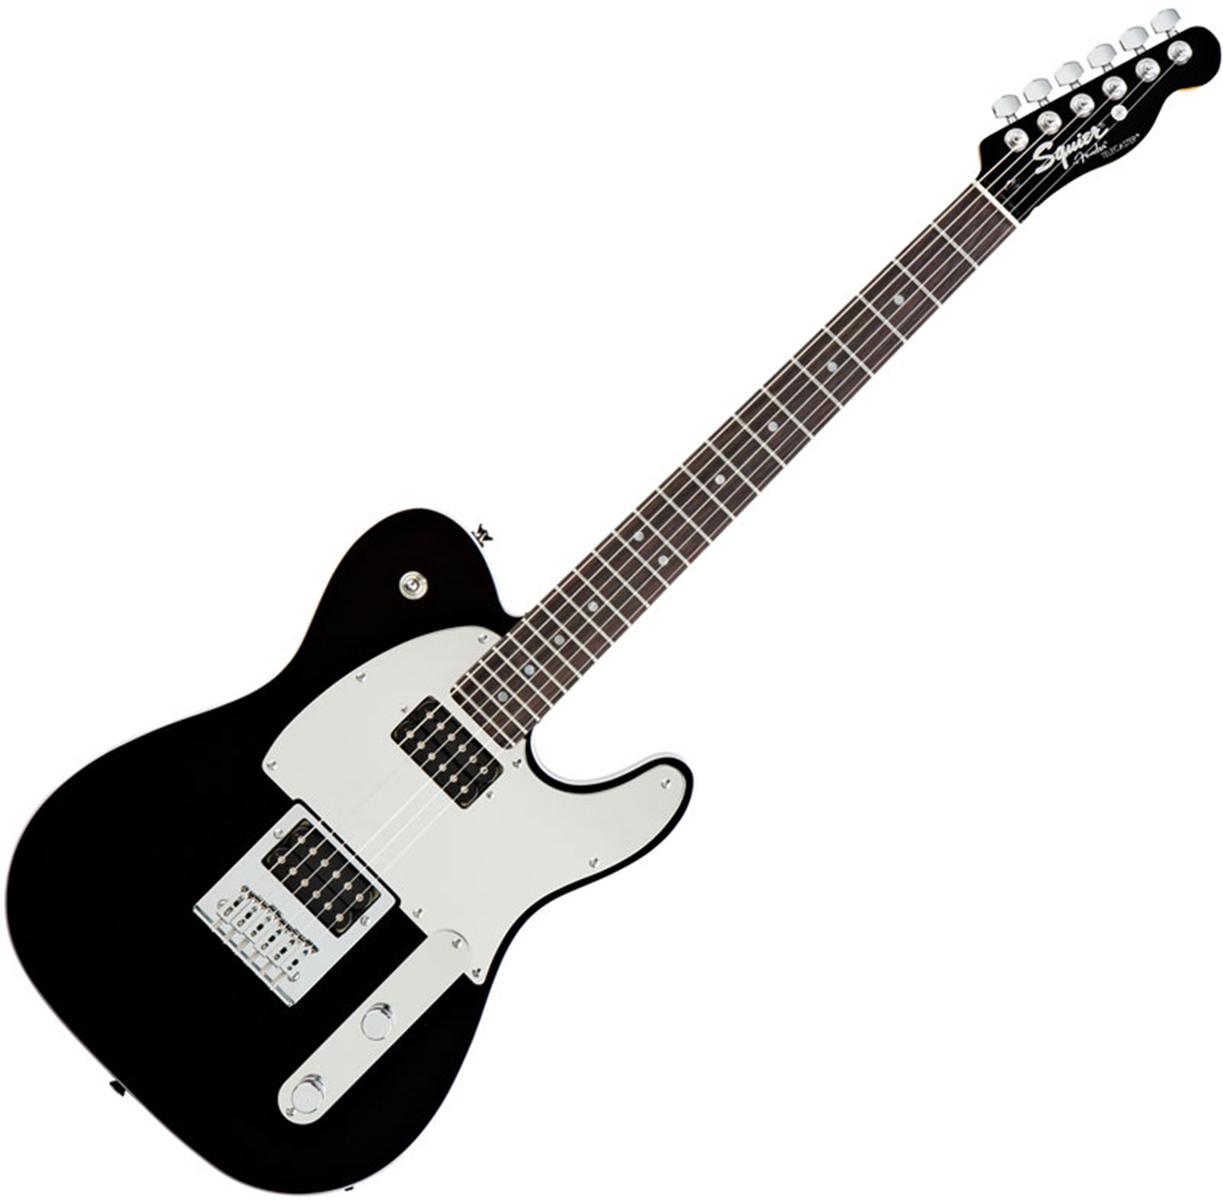 Black Electric Guitar Clip Ar - Guitar Pictures Clip Art